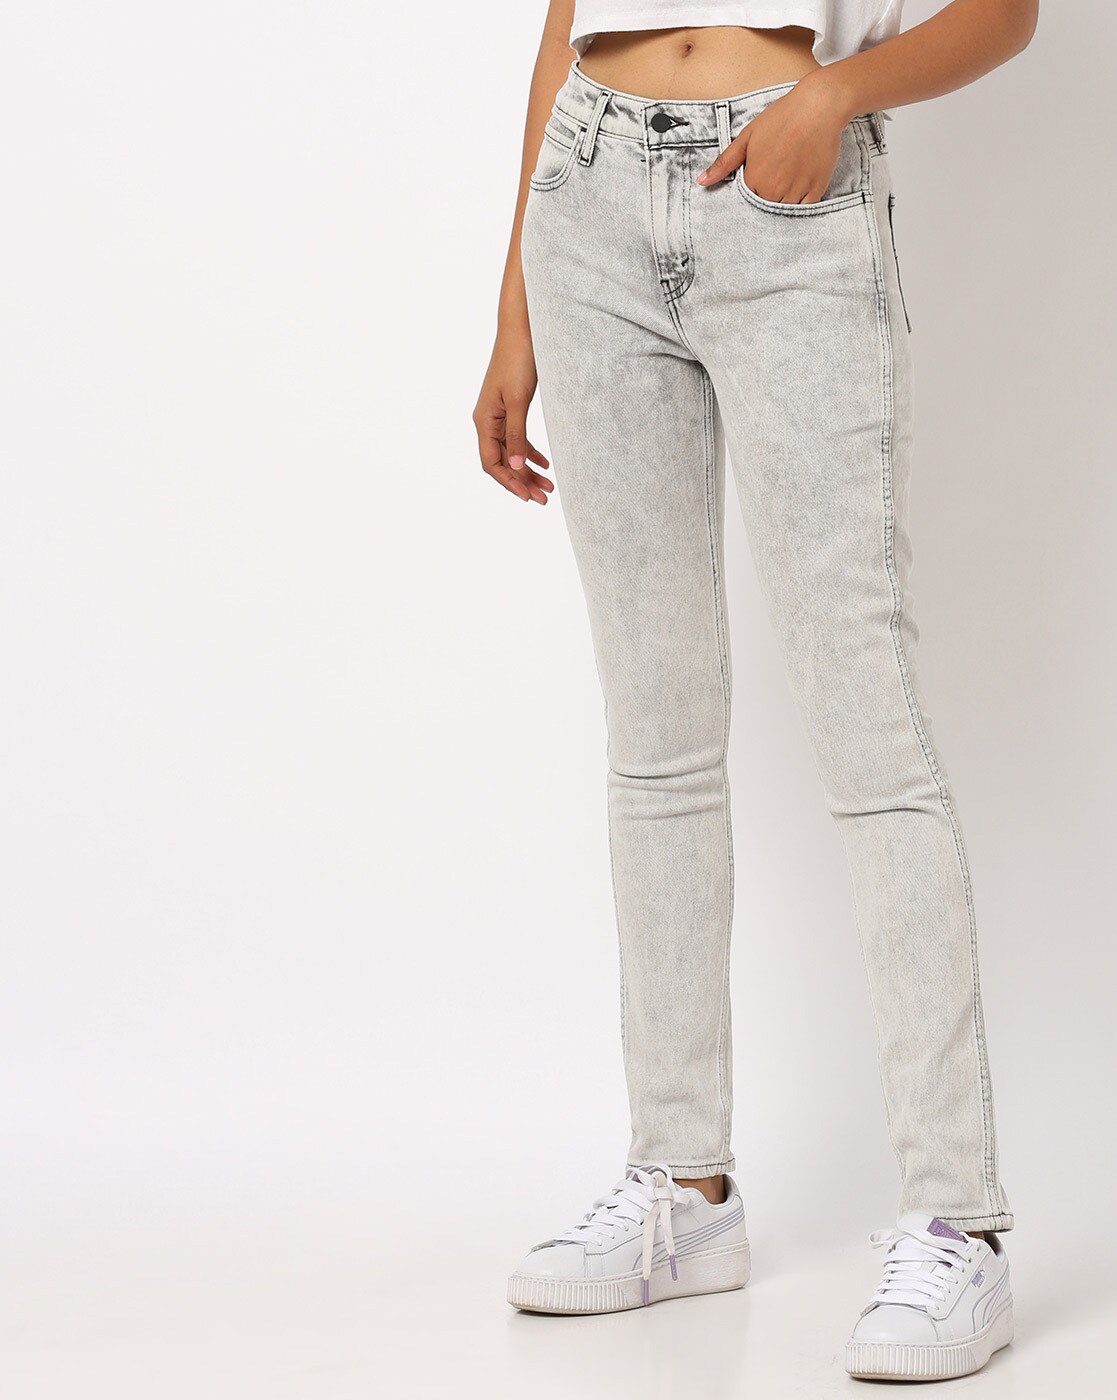 levis grey skinny jeans